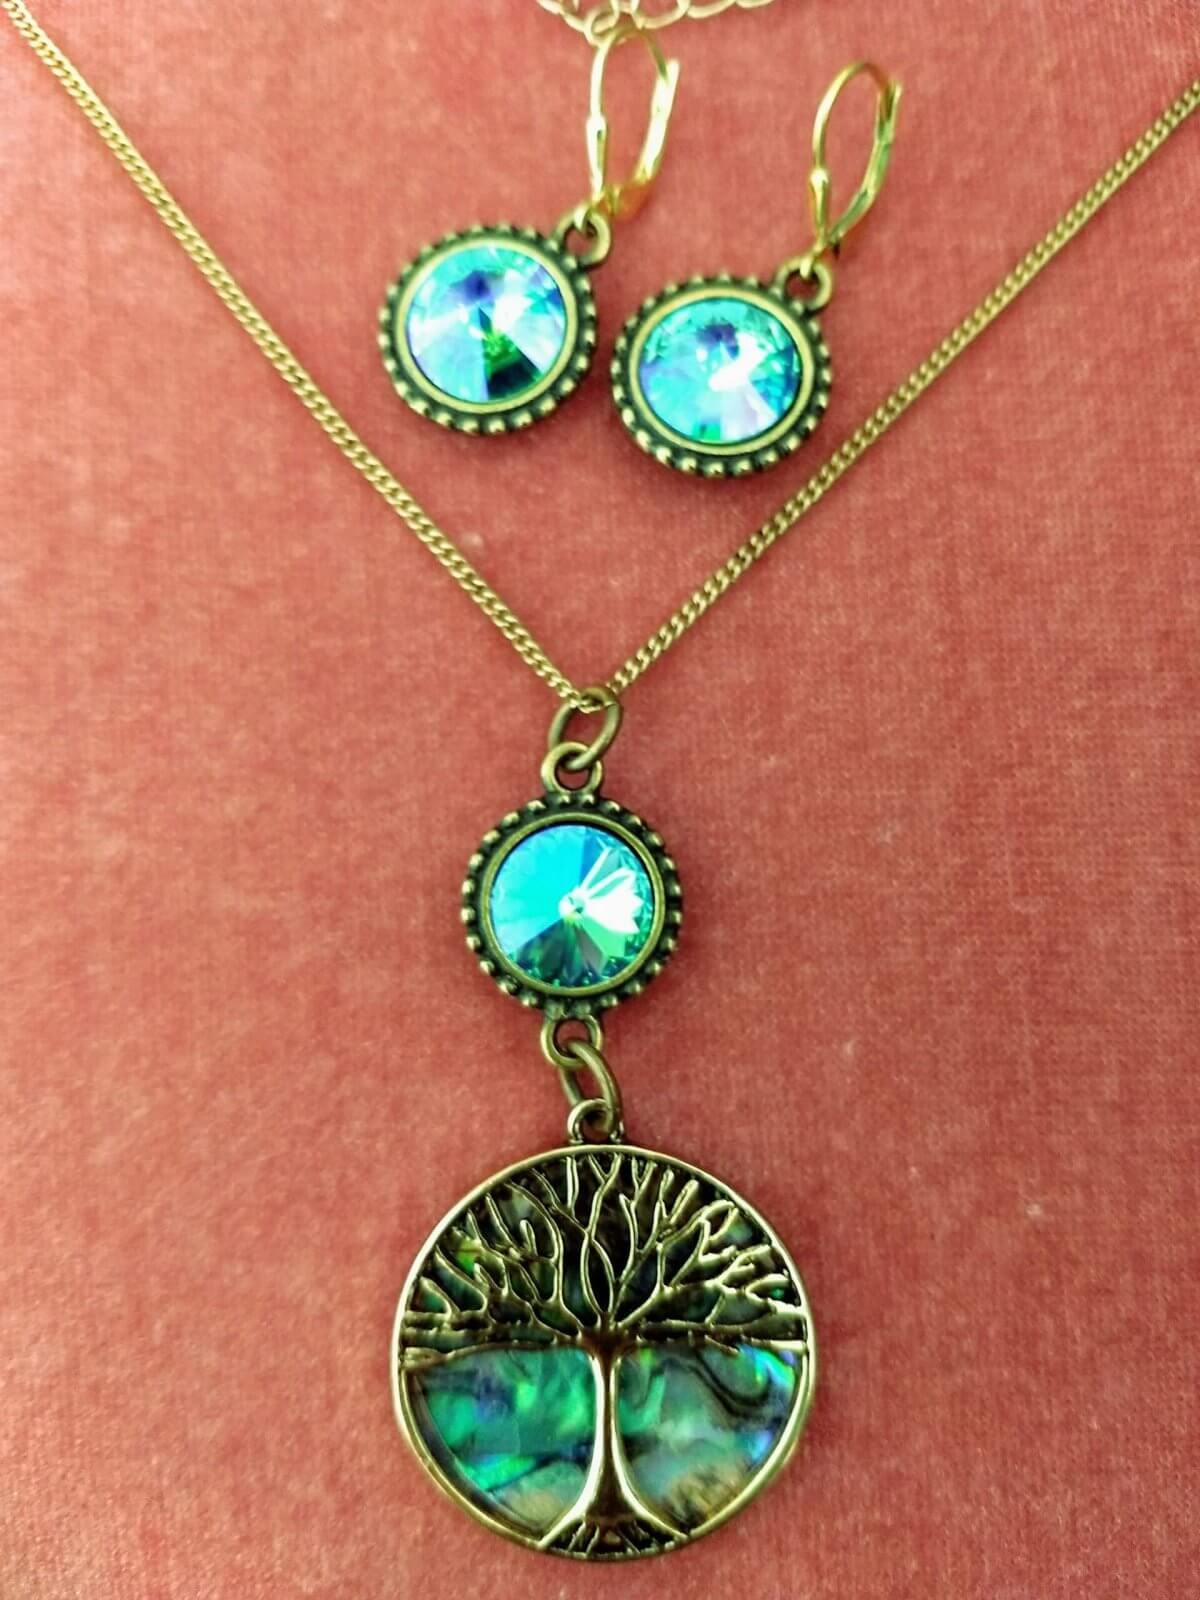 https://lorirae.com/wp-content/uploads/2020/05/Abalone-tree-of-Life-glacier-blue-necklace-gold-oxidized-2-scaled-e1588778257116.jpg